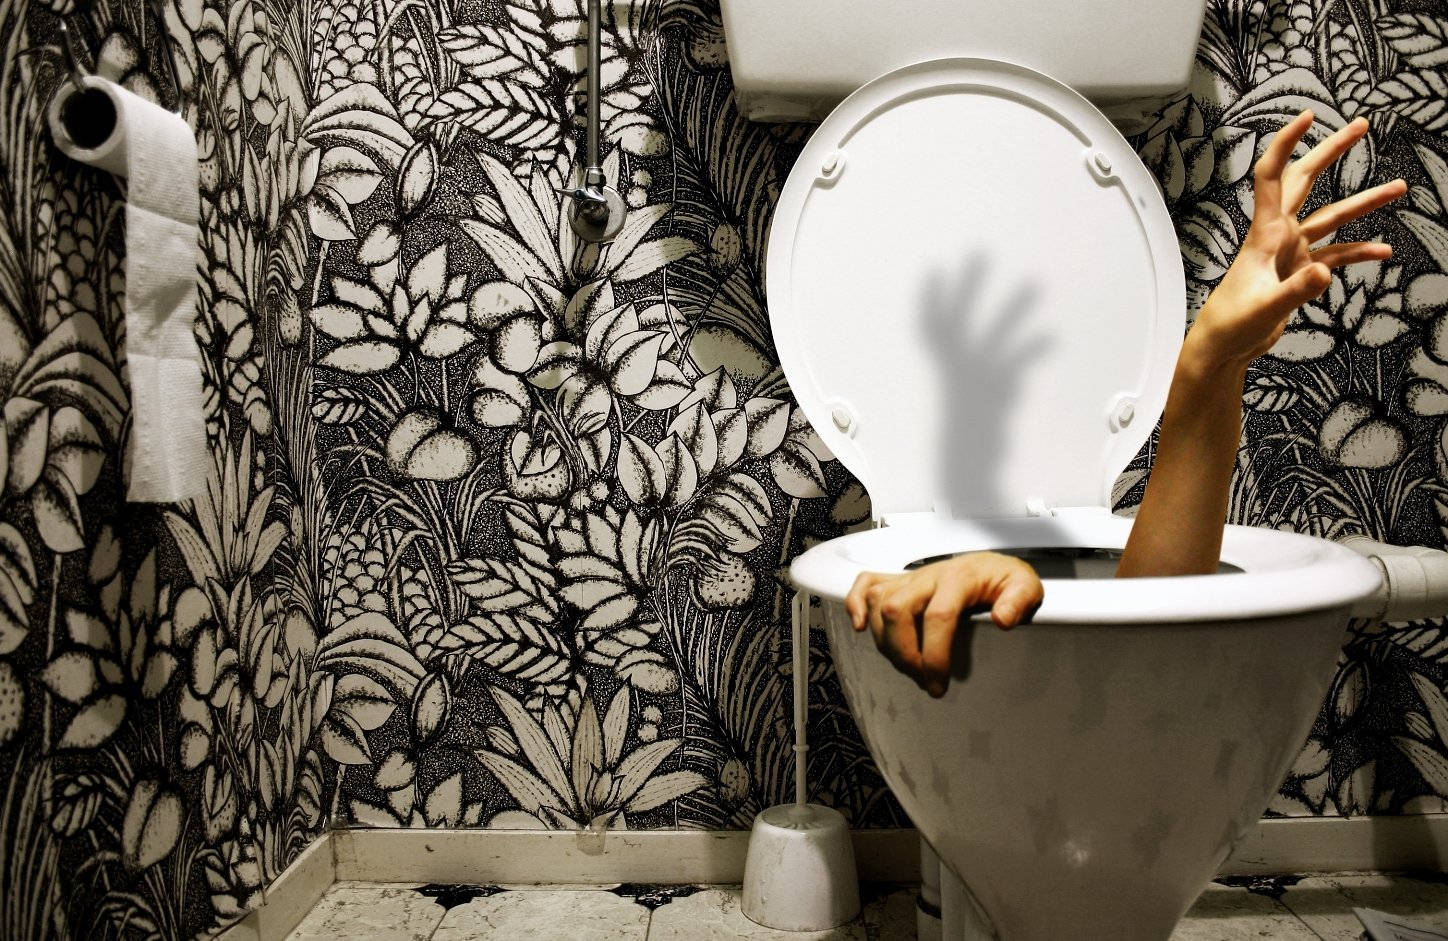 Ertrinkenin Der Toilettenschüssel Wallpaper